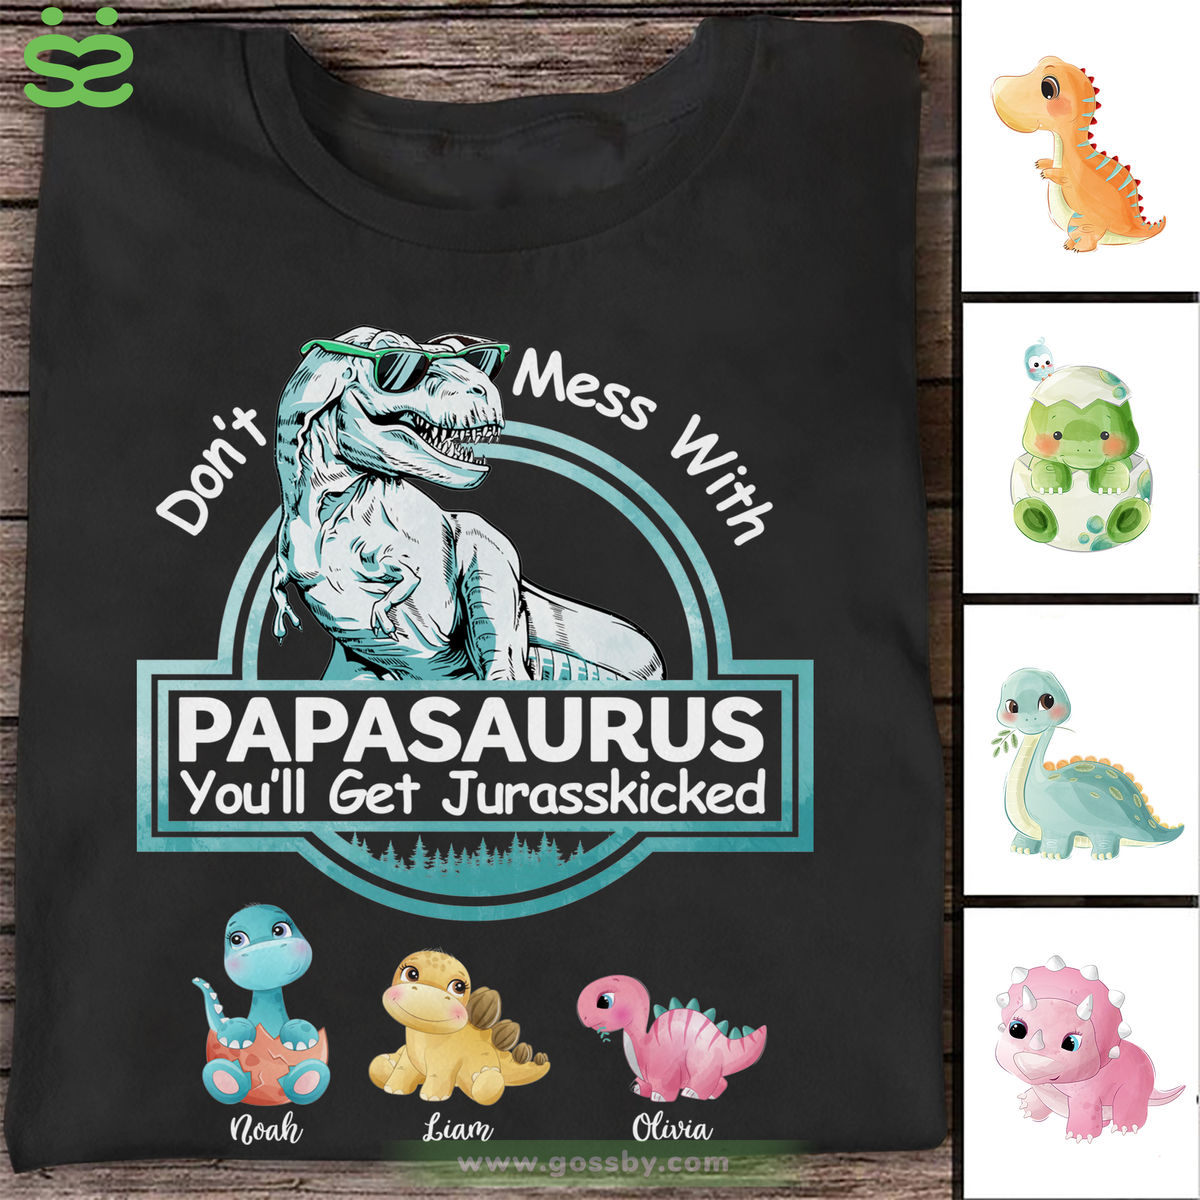 Don't Mess With Papasaurus - Black